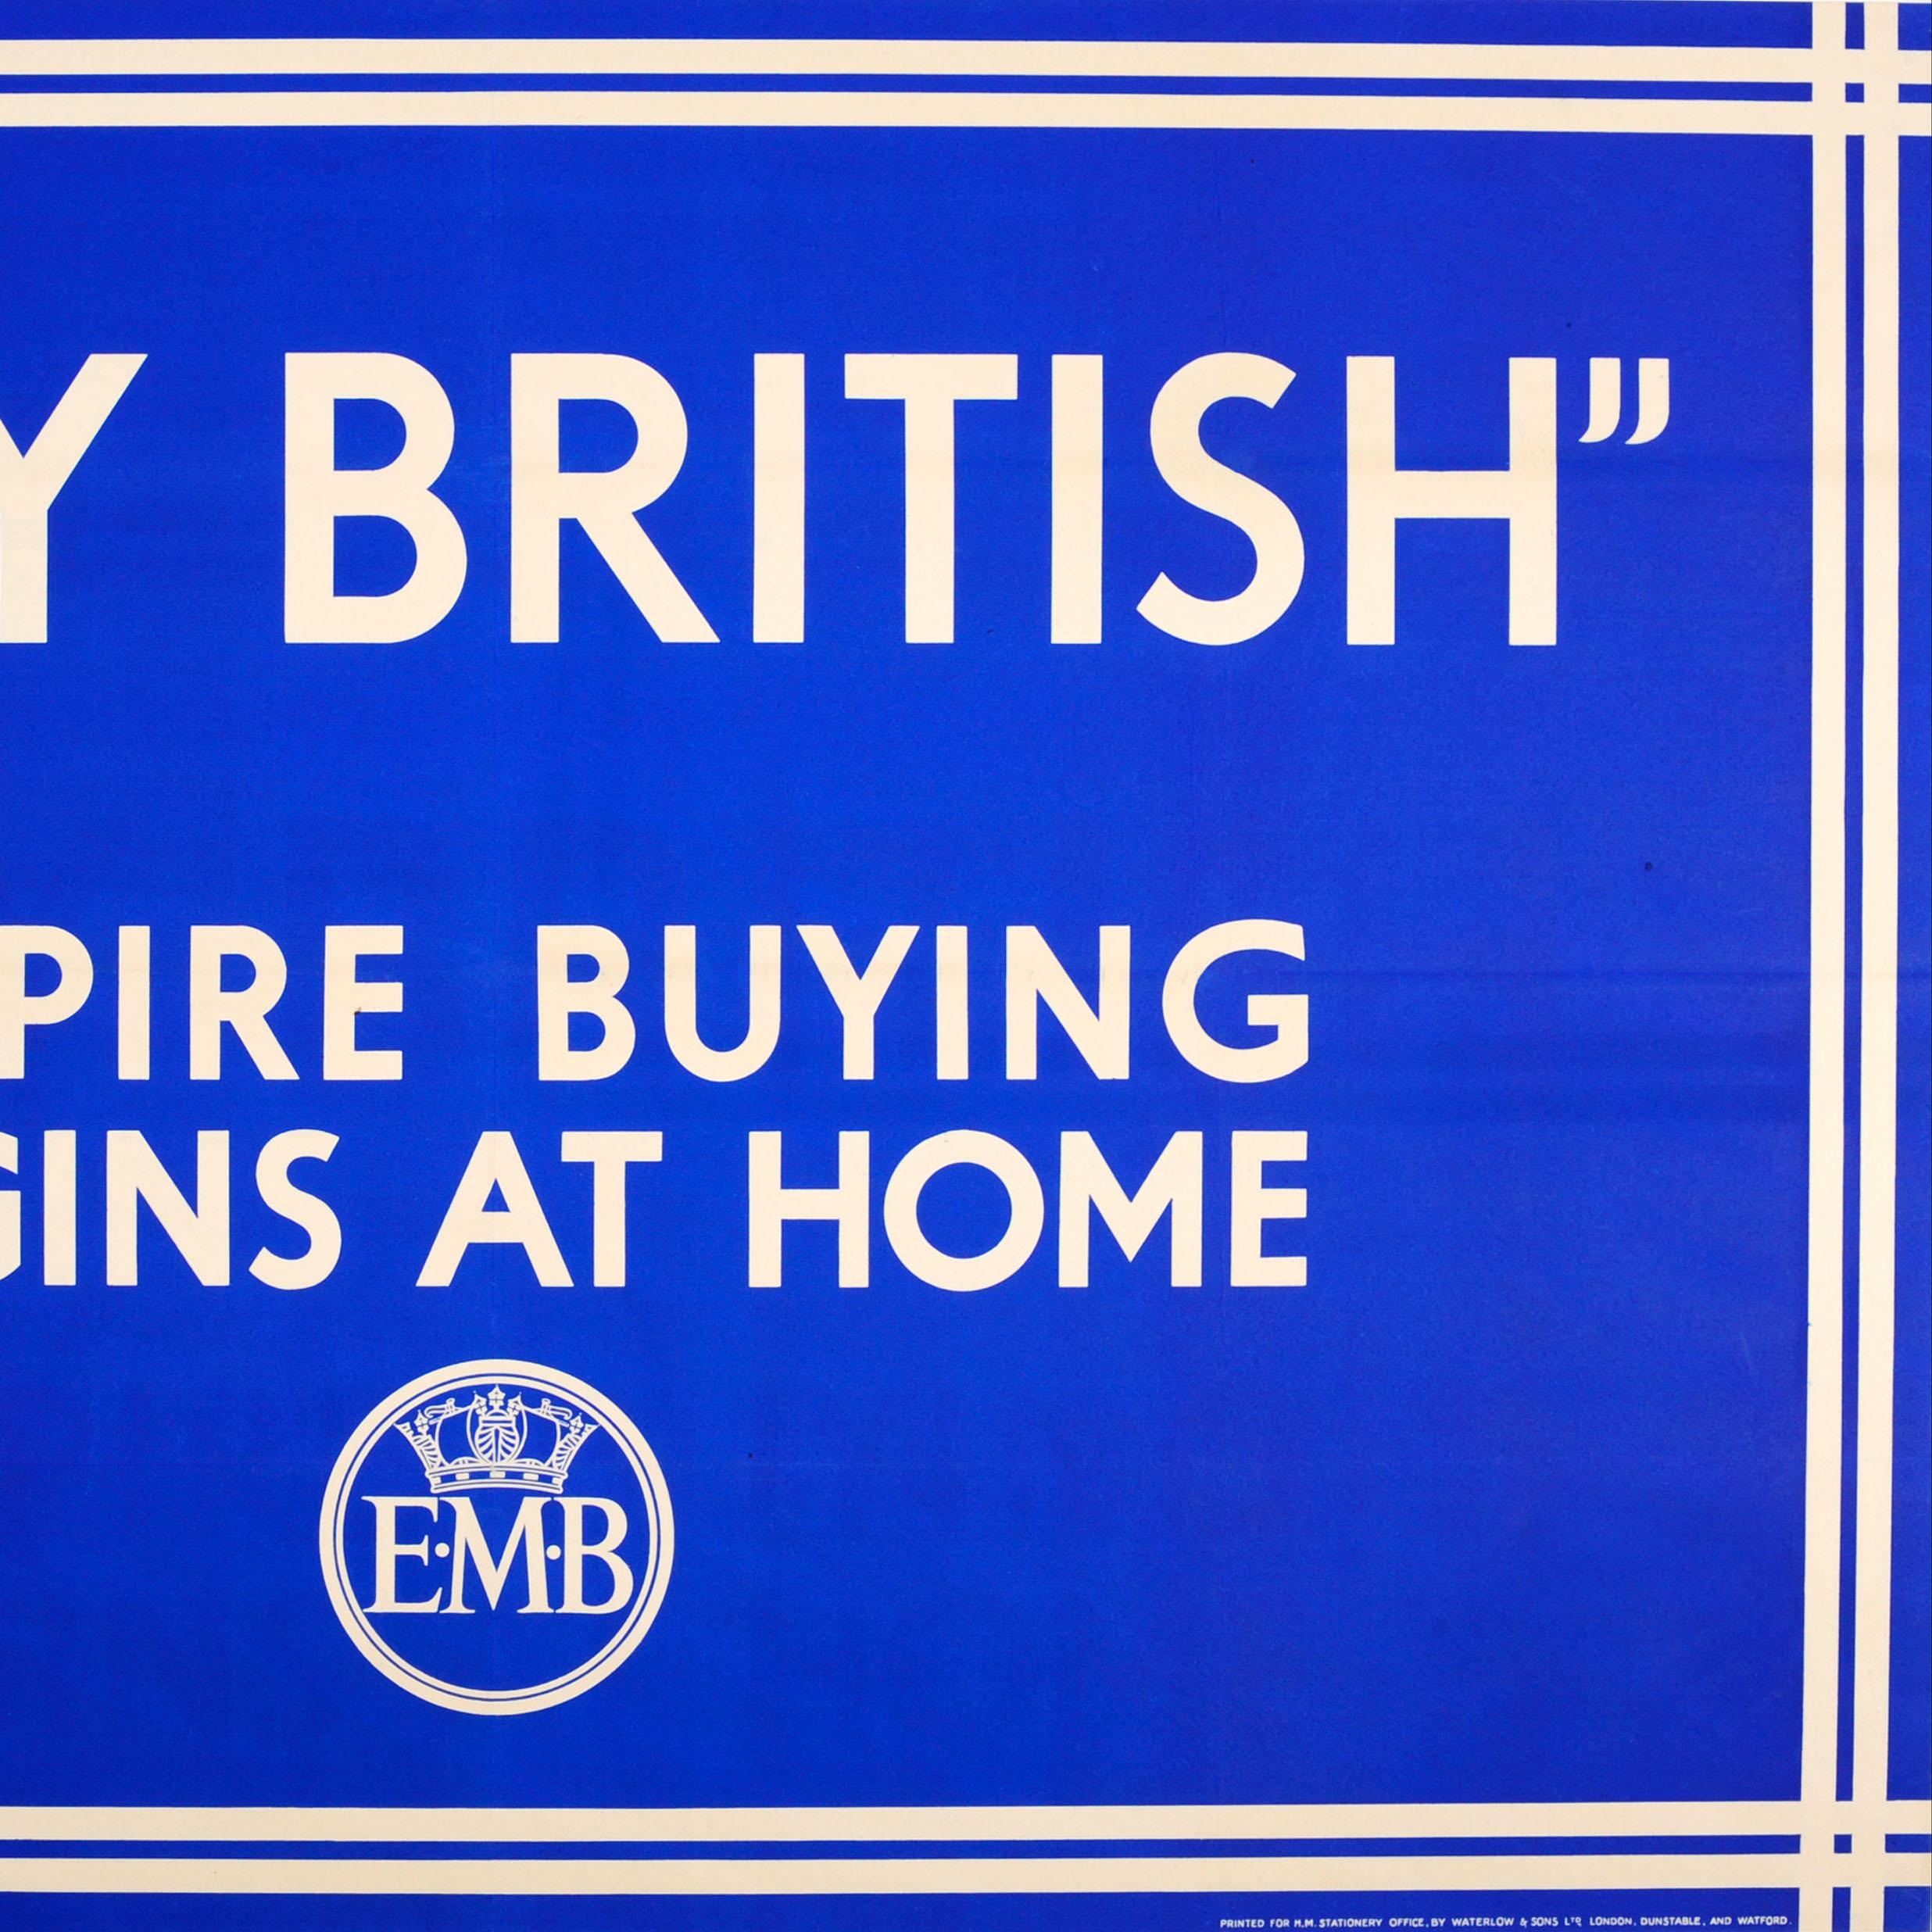 Original Vintage Advertising Poster Buy British Empire Buying Begins At Home EMB For Sale 1